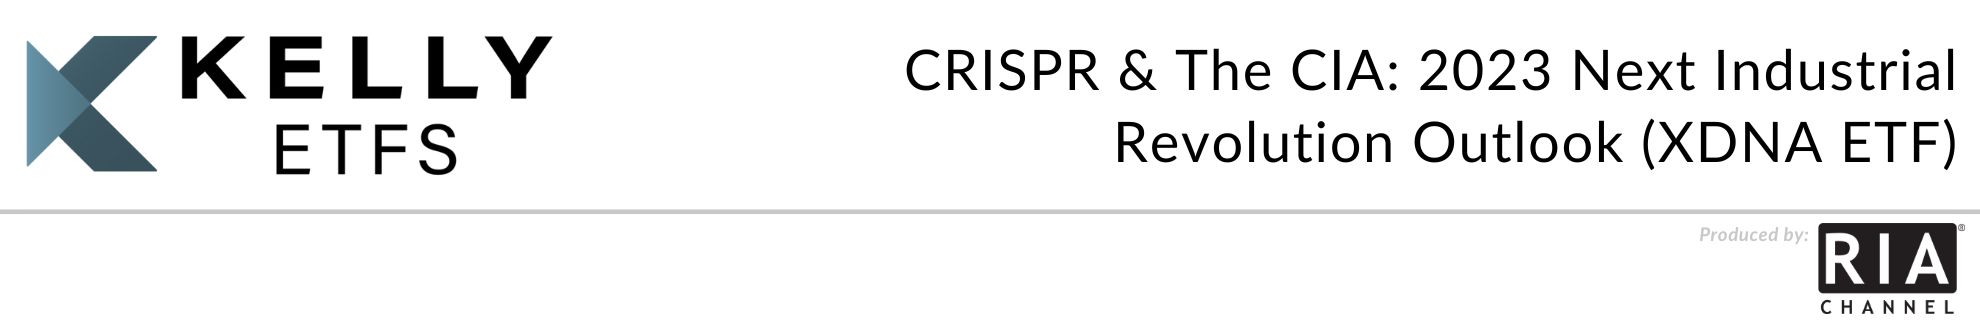 CRISPR & The CIA: 2023 Next Industrial Revolution Outlook (XDNA ETF)